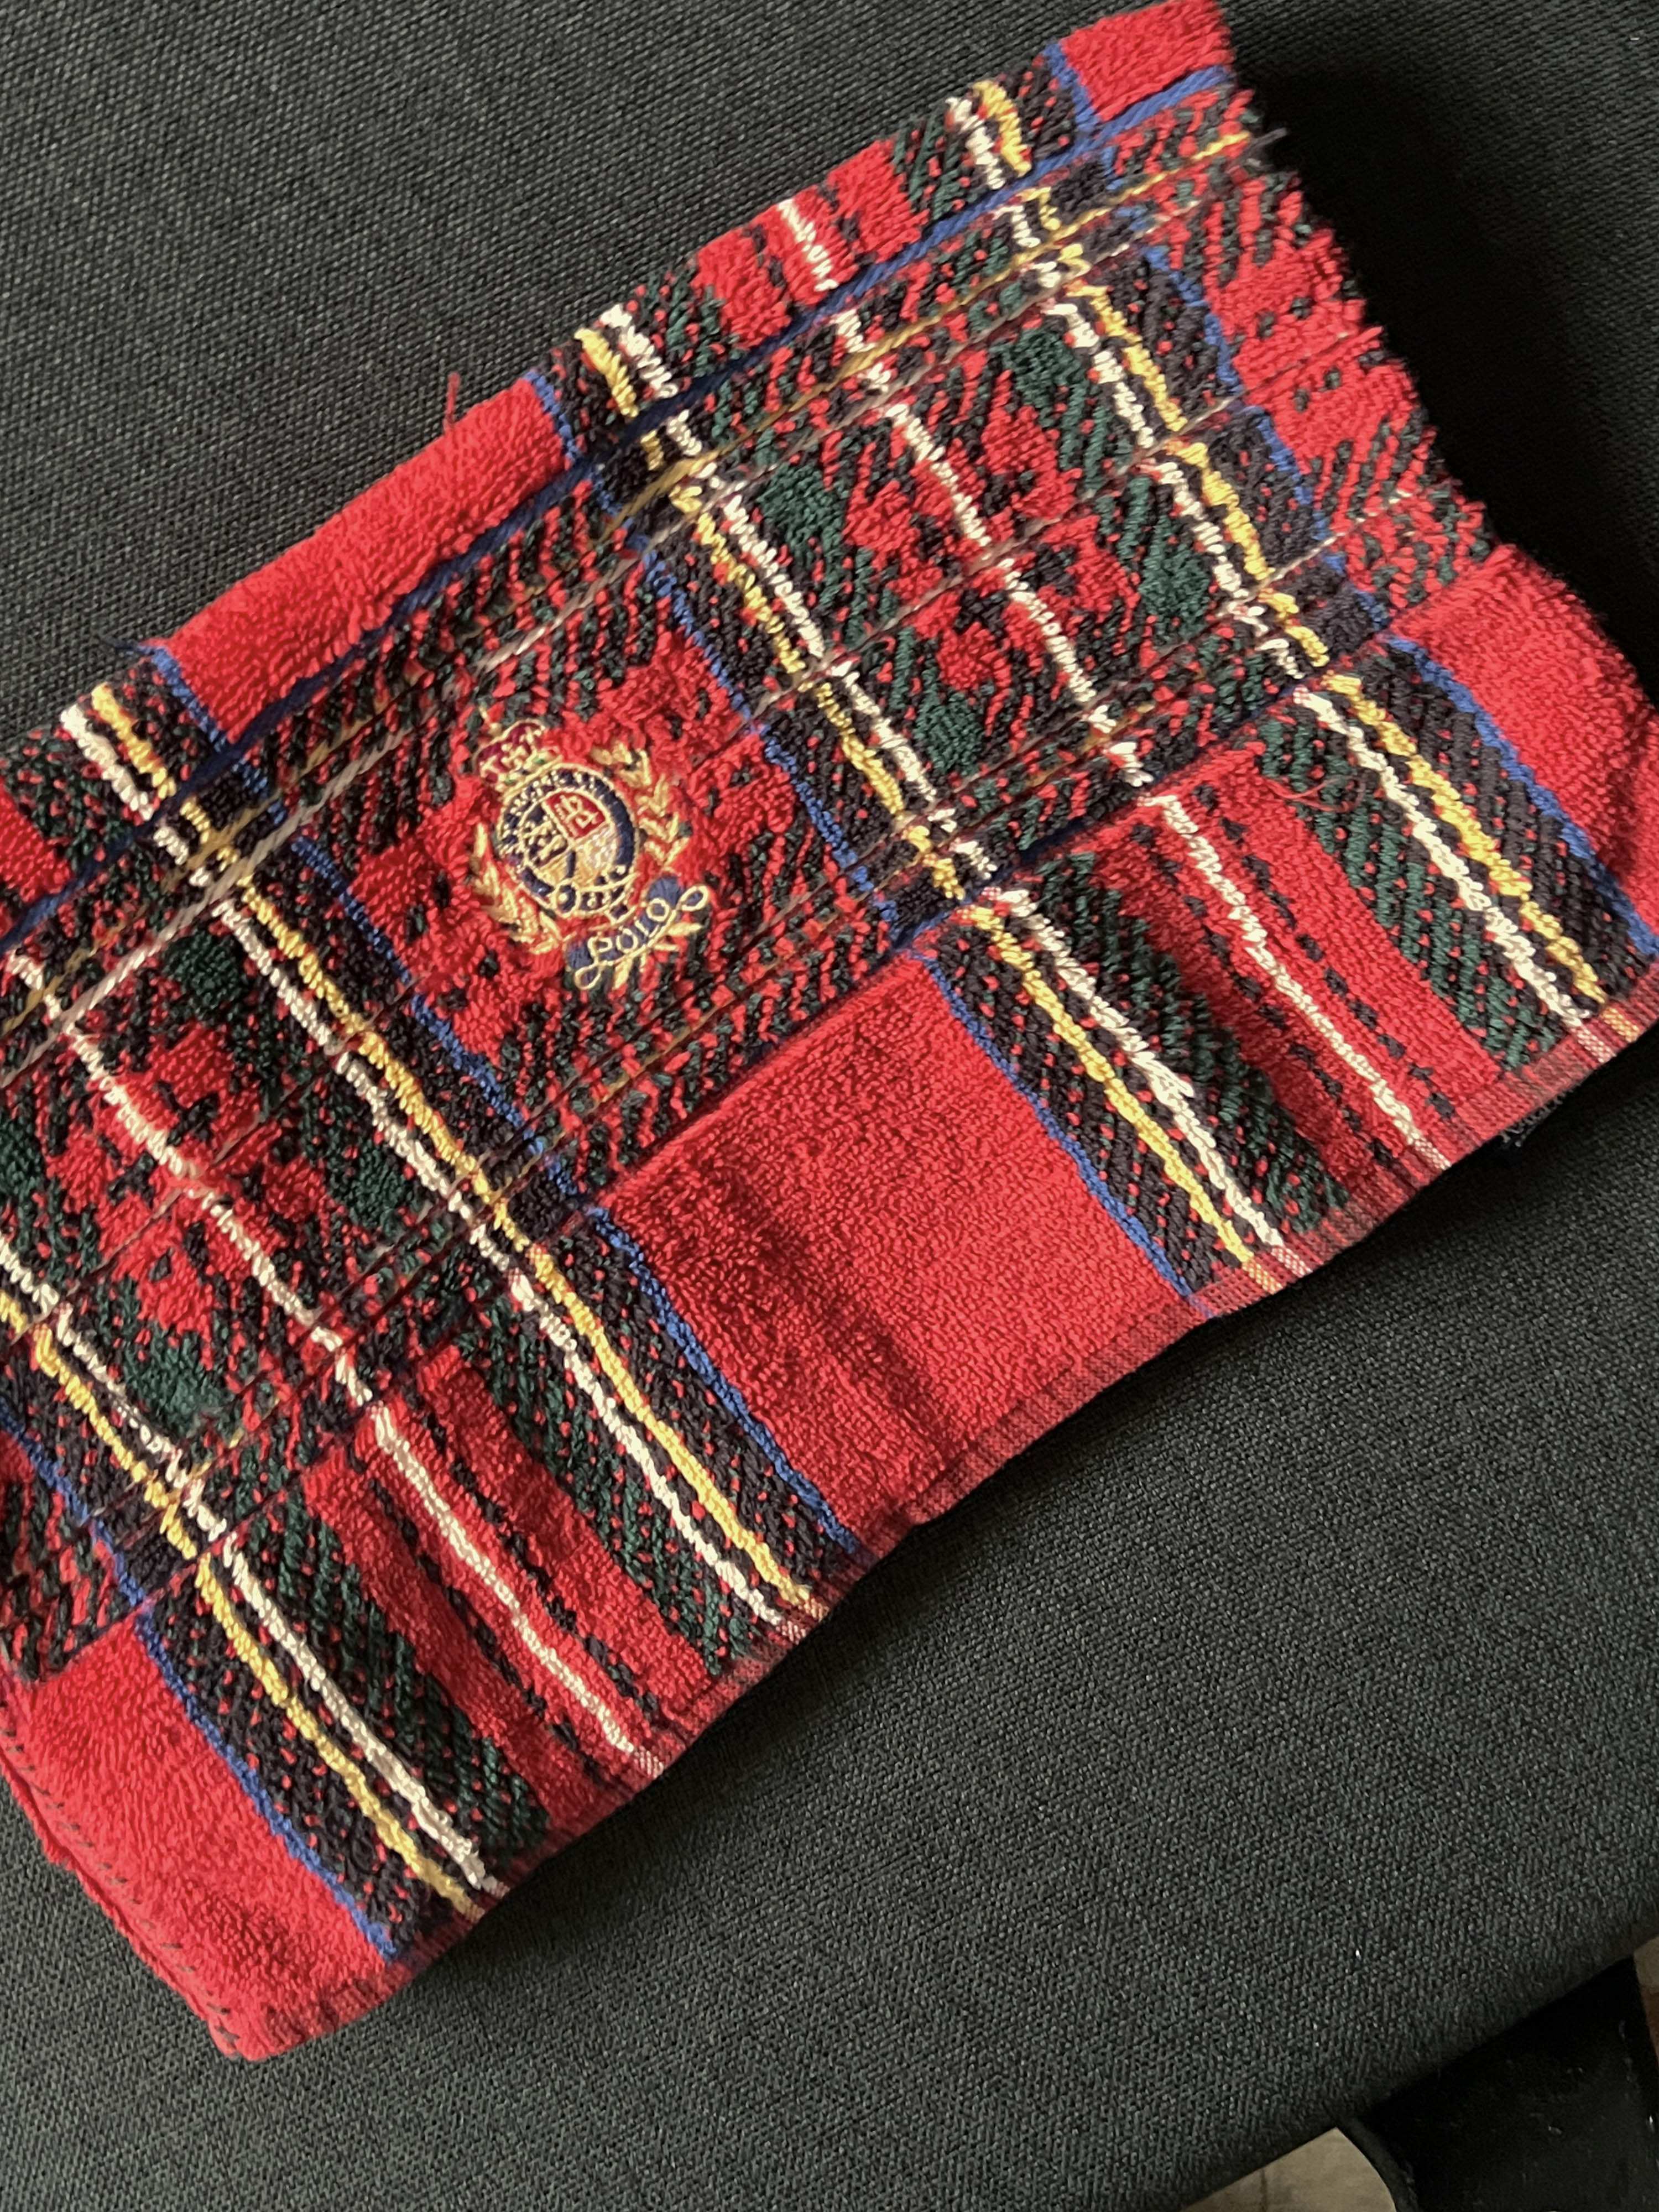 Ralph Lauren towel pouch